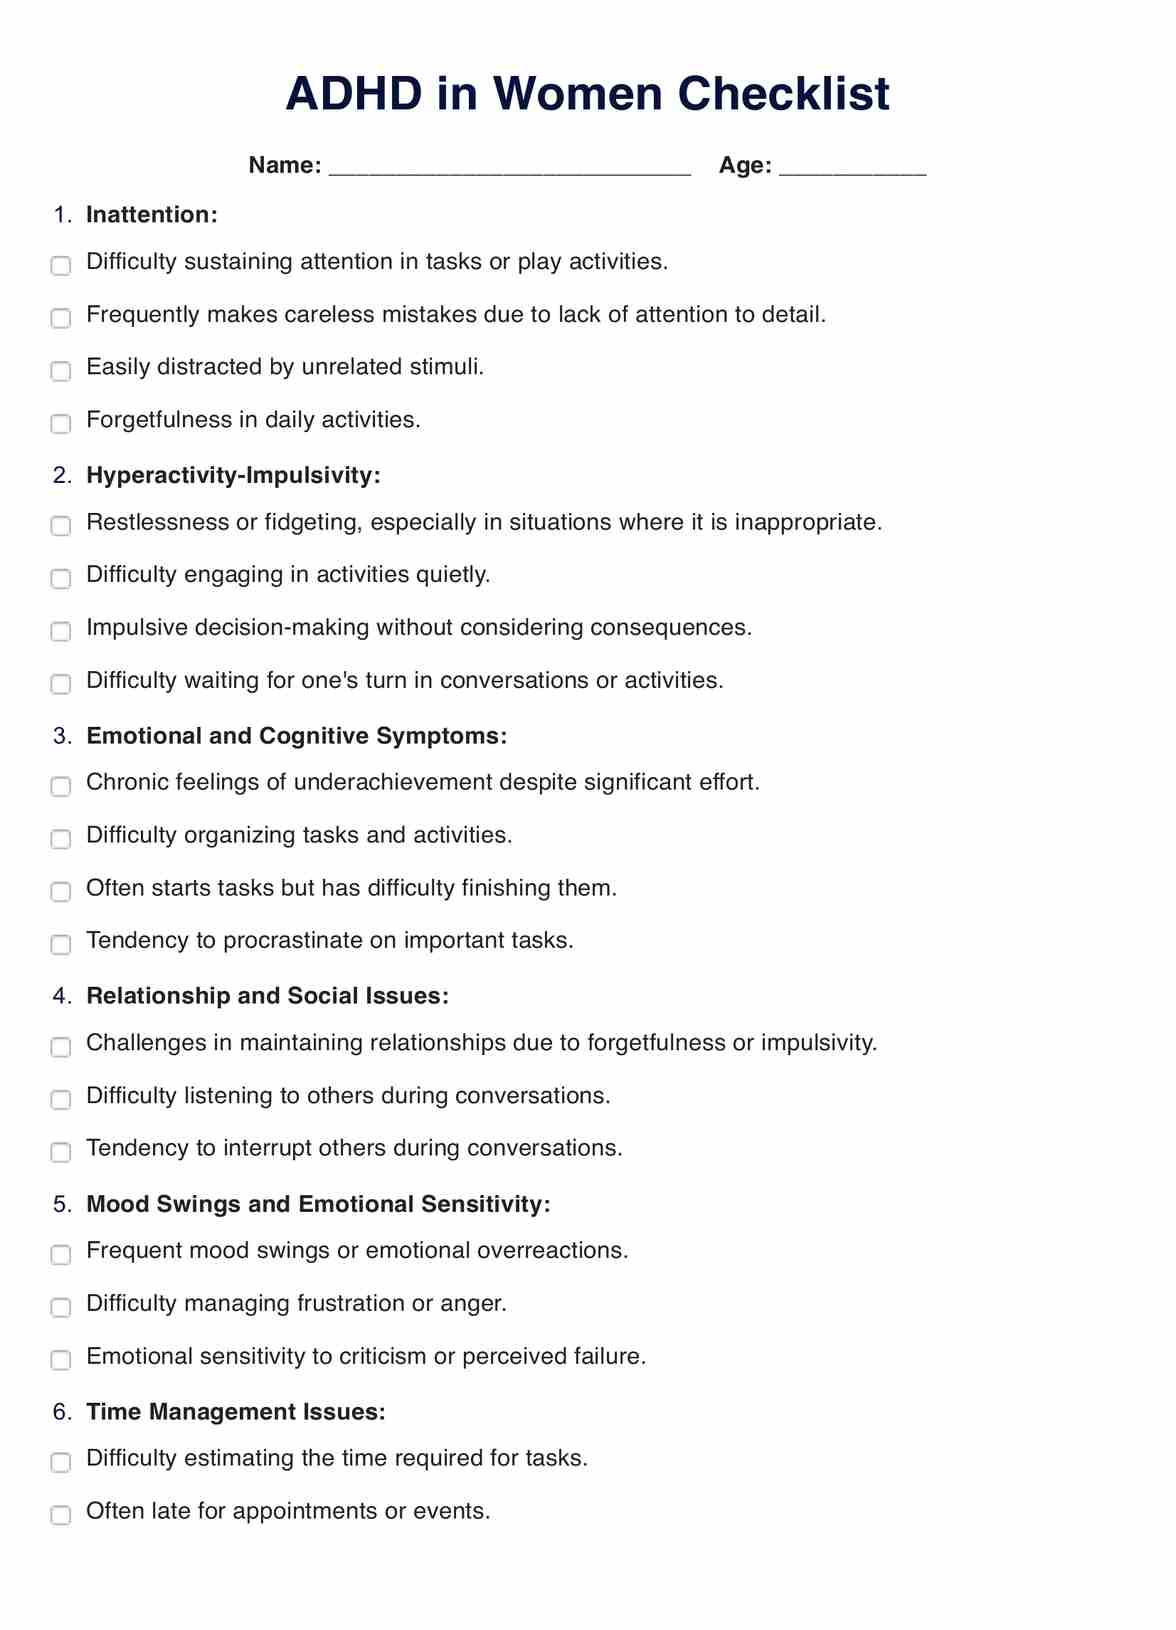 ADHD in Women Checklist PDF Example